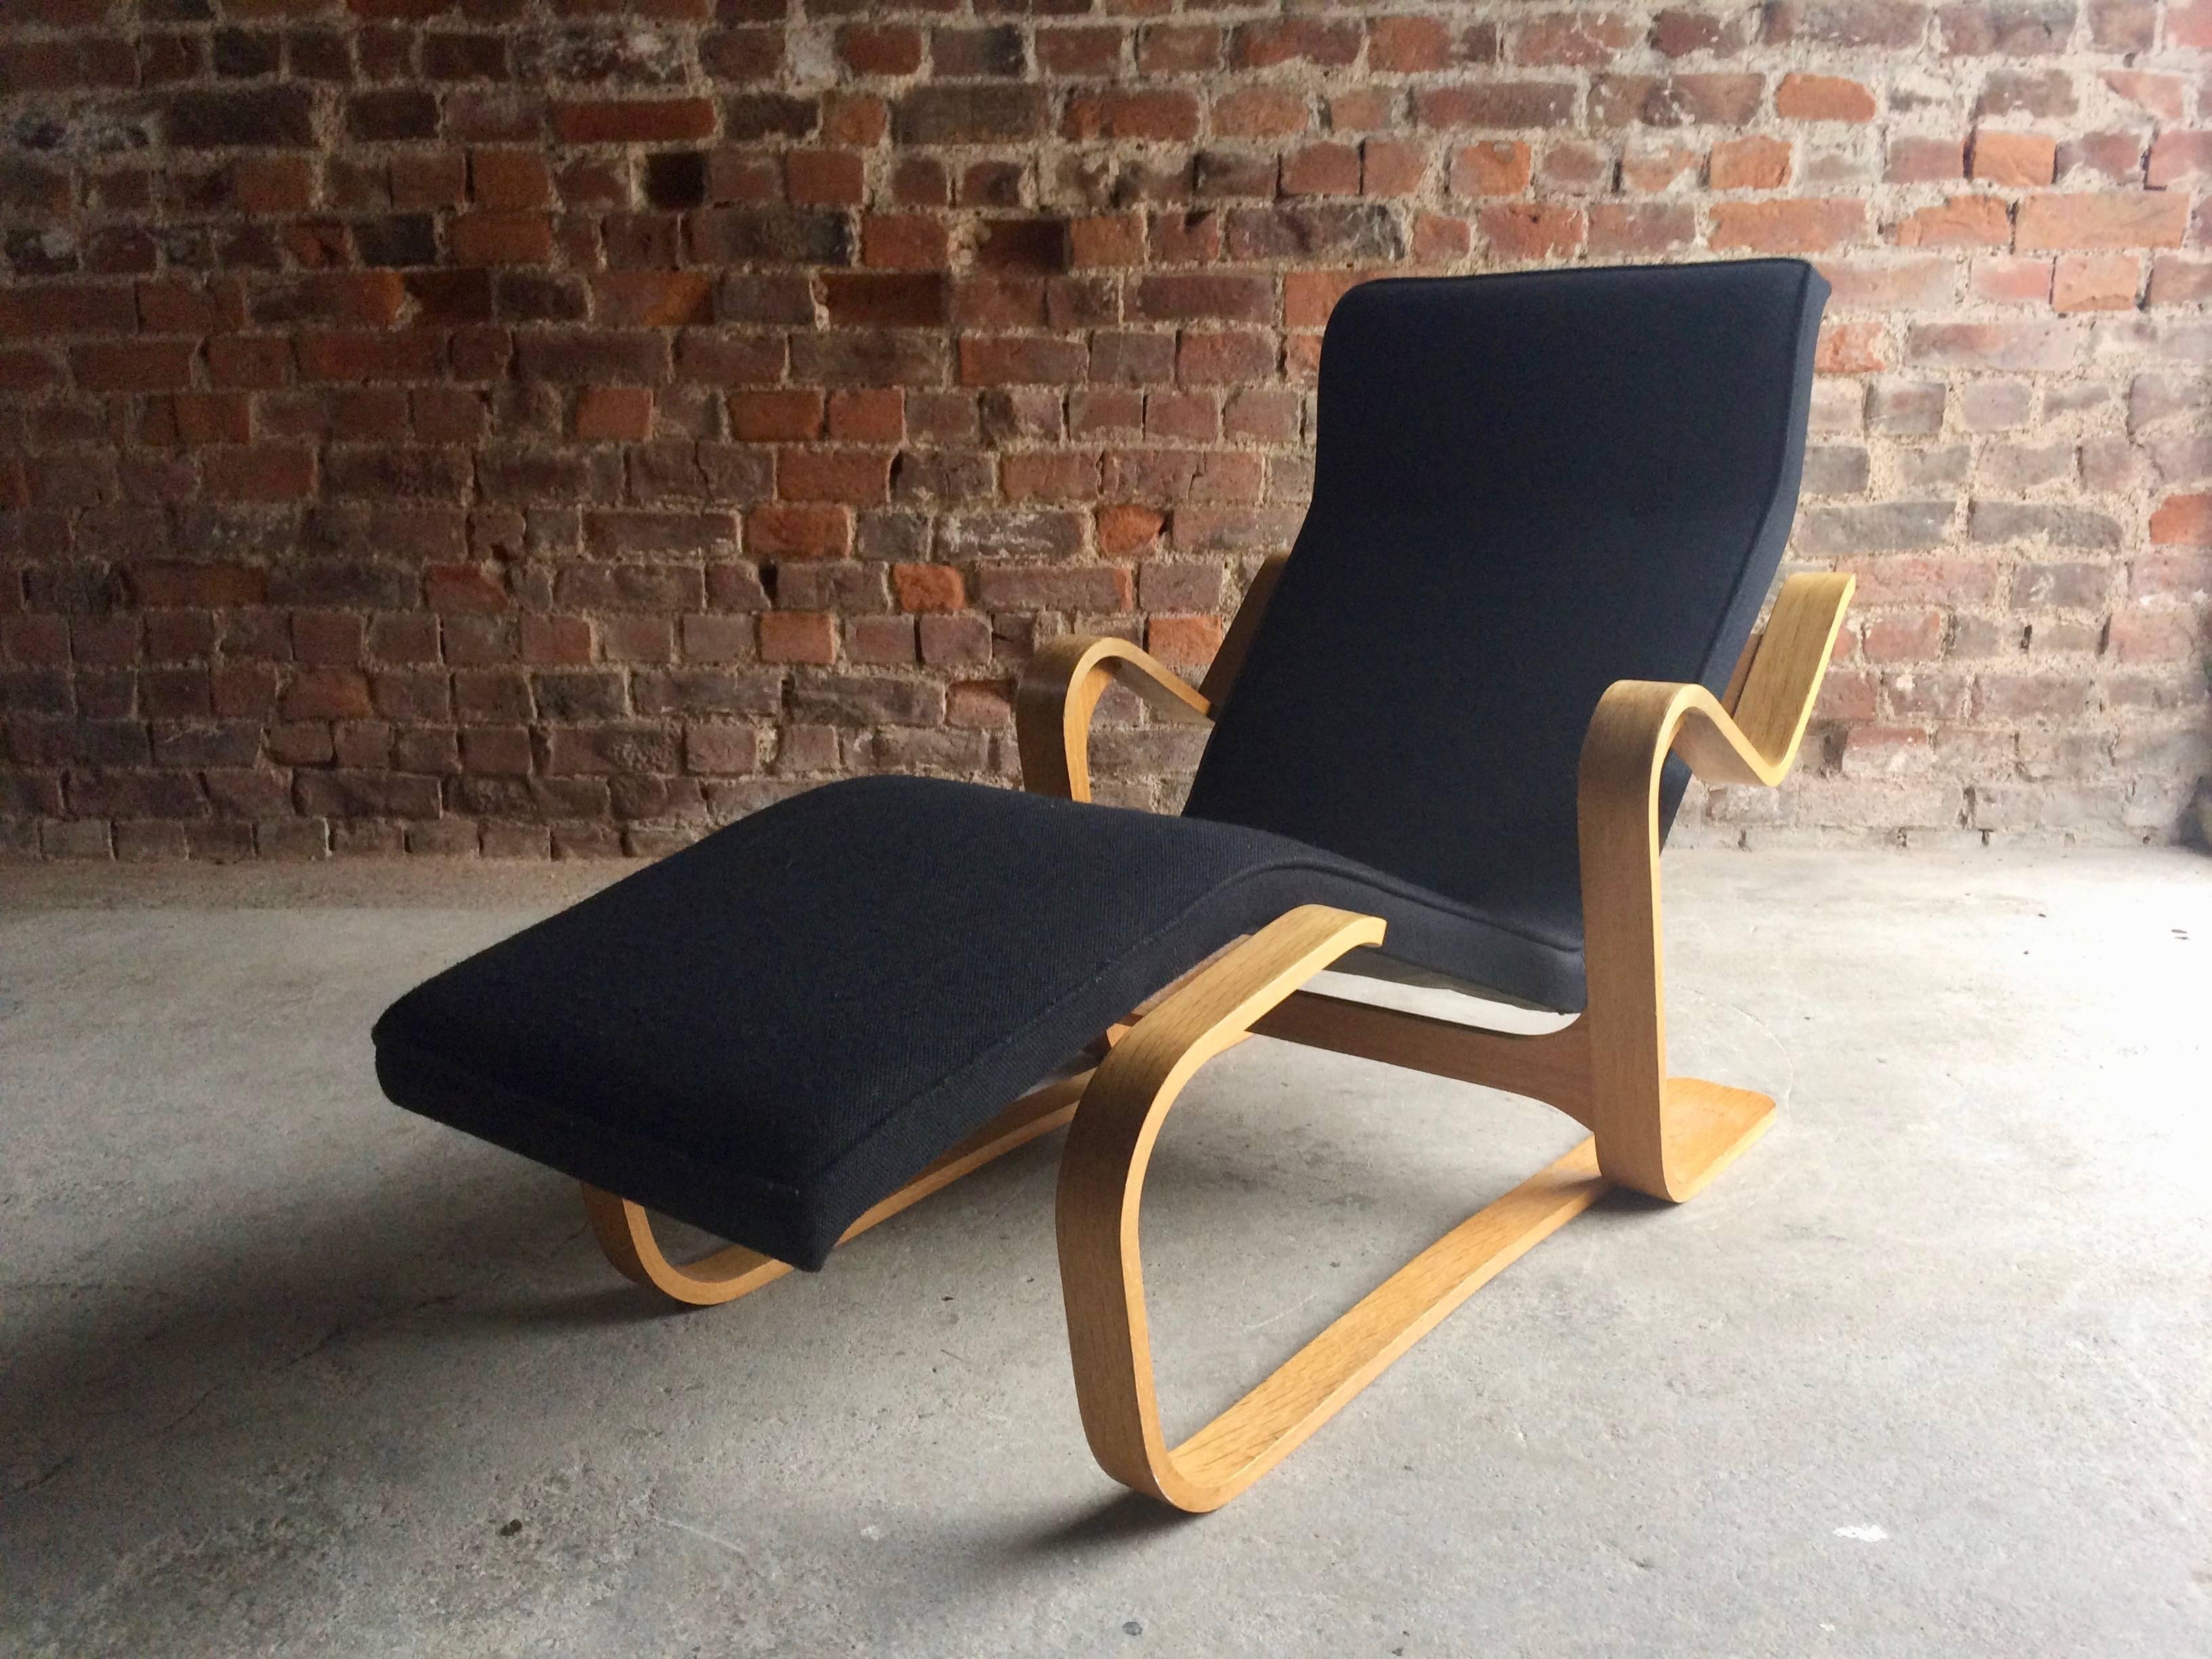 20th Century Marcel Breuer Long Chair Chaise Longue Black Midcentury 1970s Bauhaus No. 3